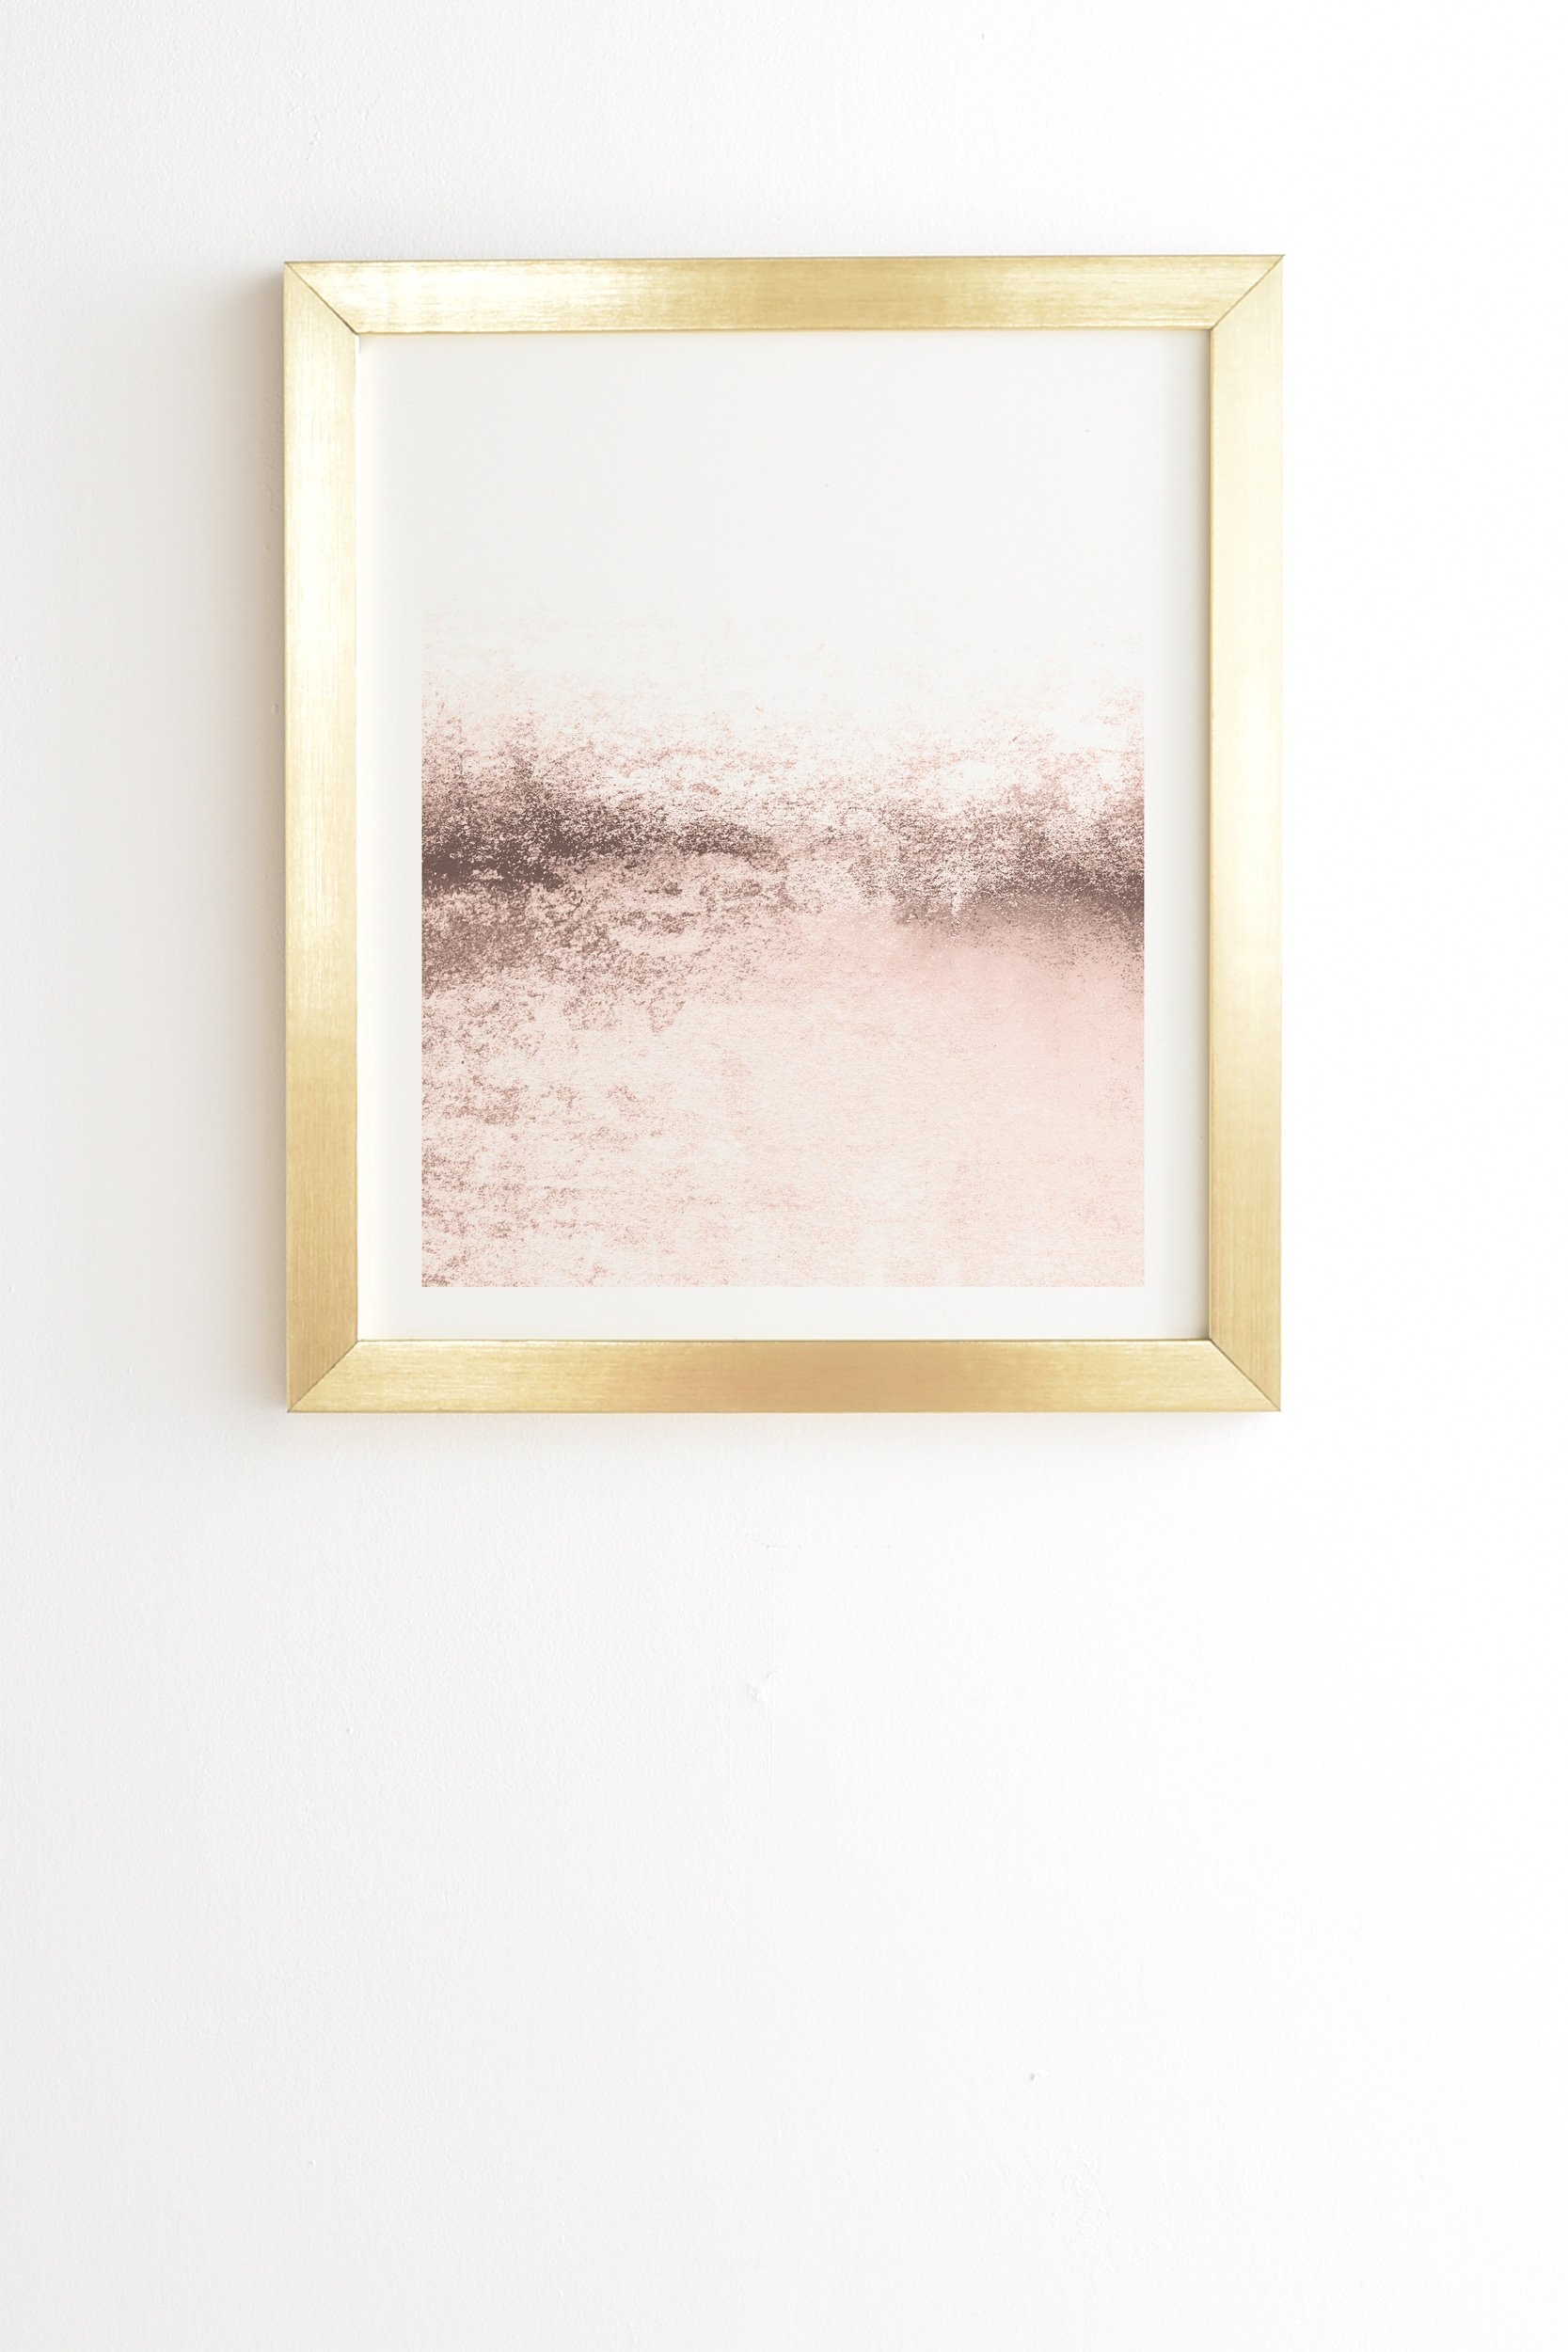 GOLD FRAMED WALL ART SNOWDREAMER BLUSH LIGHT  BY MONIKA STRIGEL, 19"x22.4" - Image 0